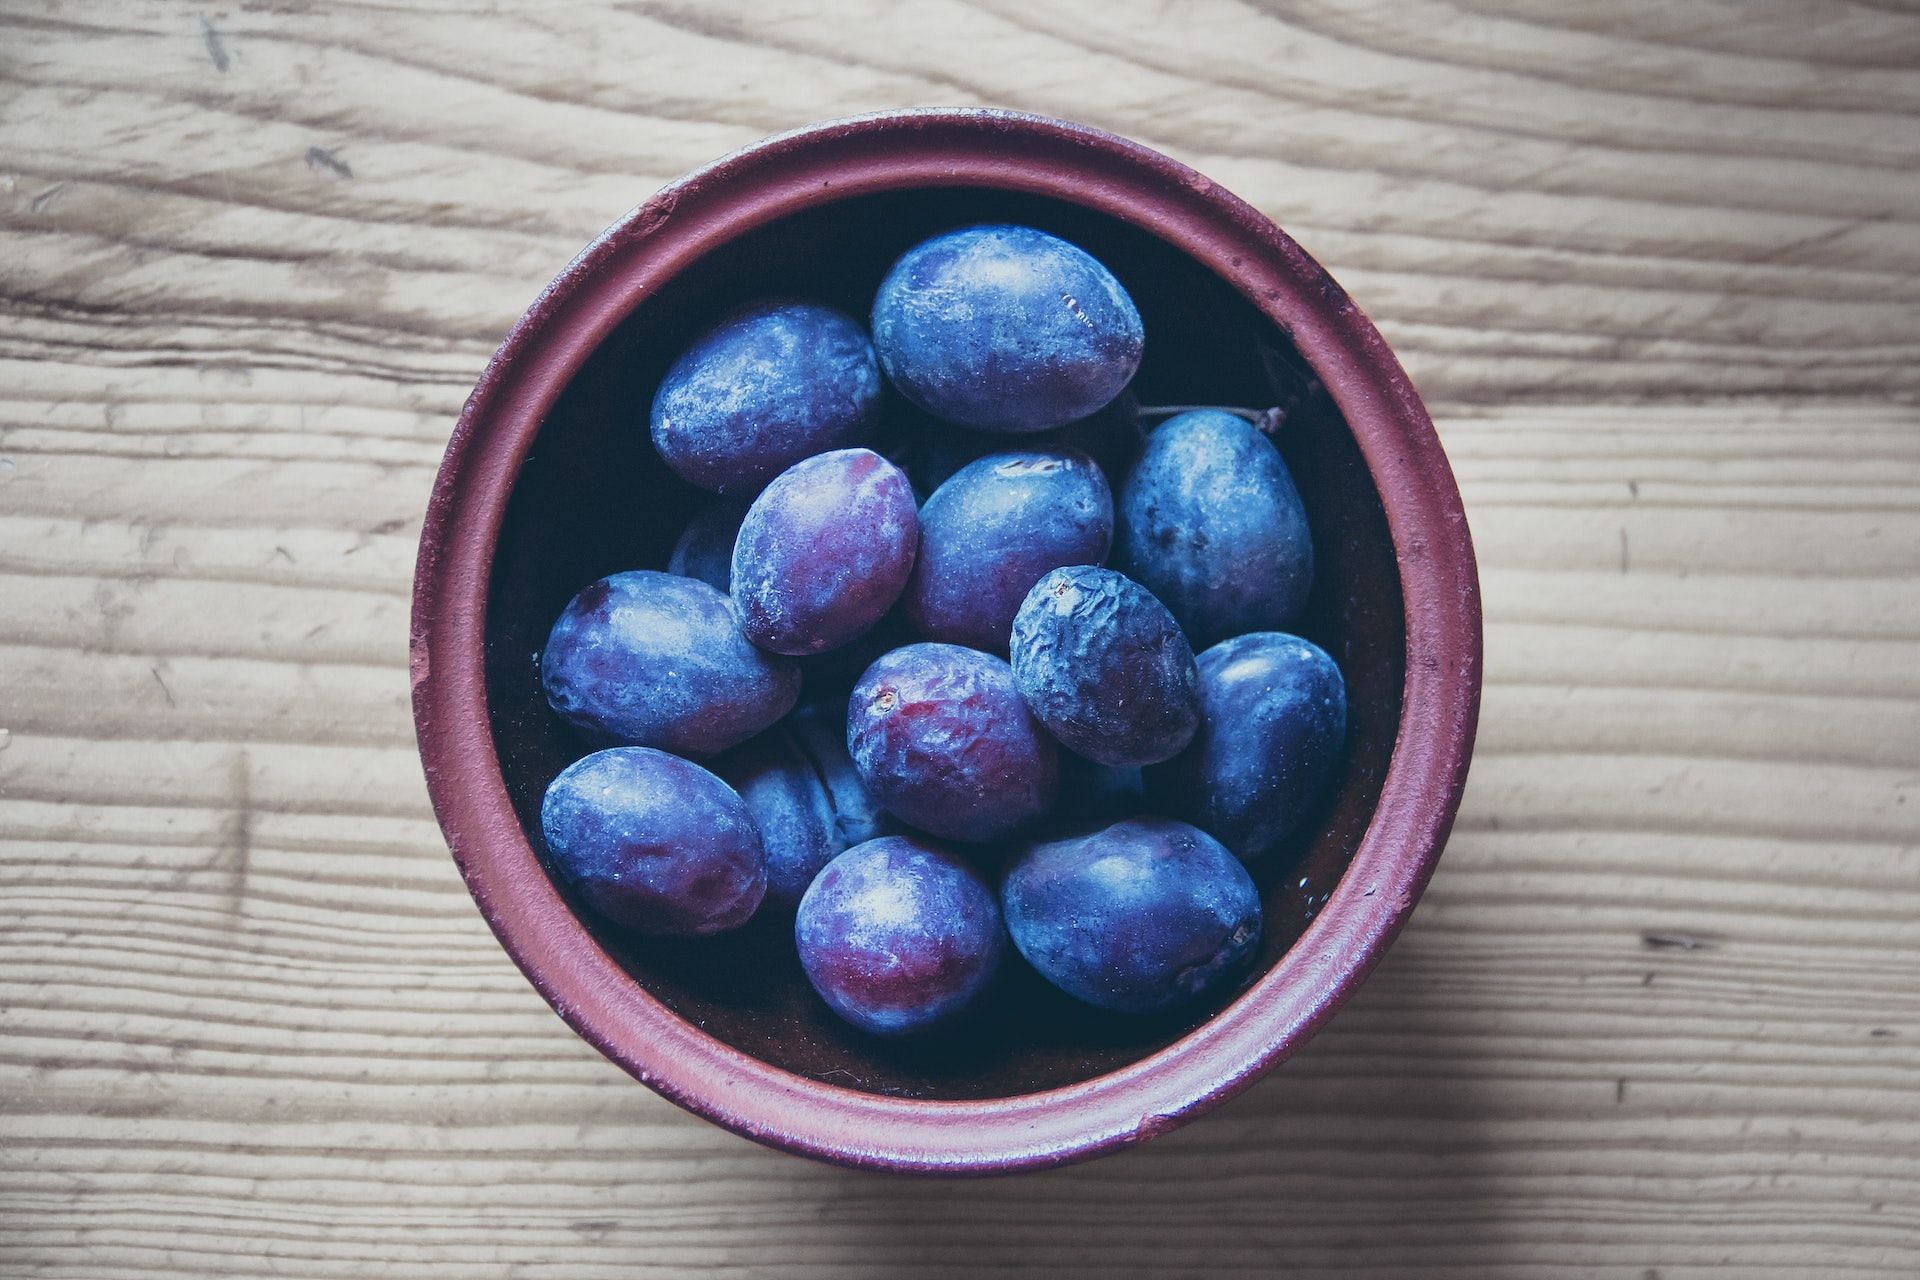 Black plums have numerous health and medicinal benefits. (Photo via Pexels/Pixabay)